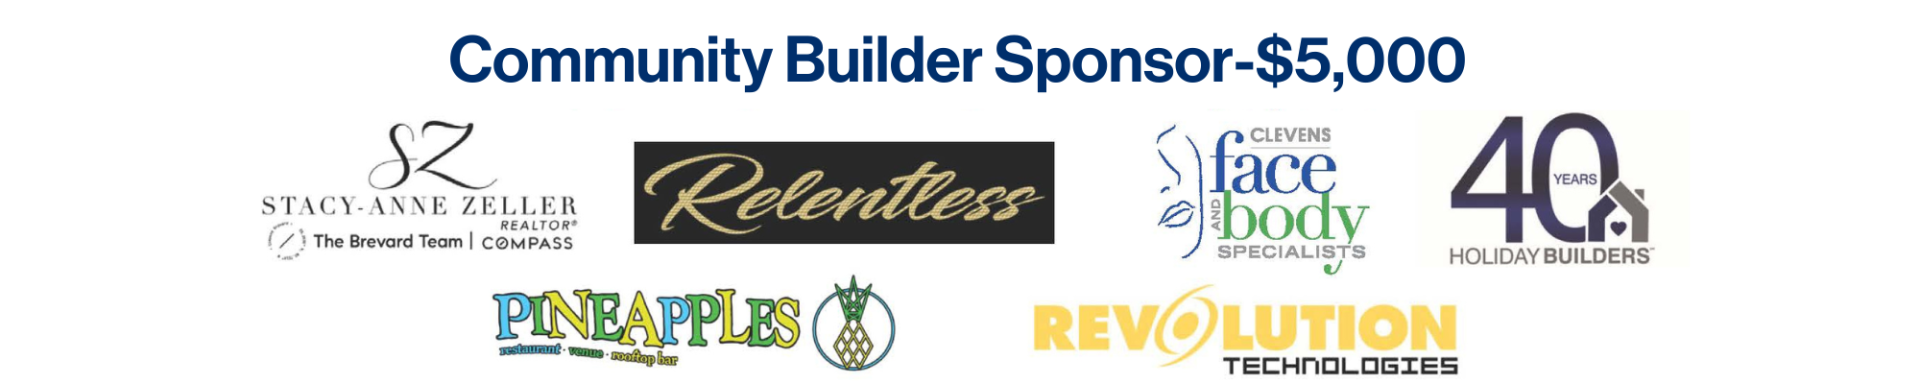 Community Builder Sponsor Event Logos